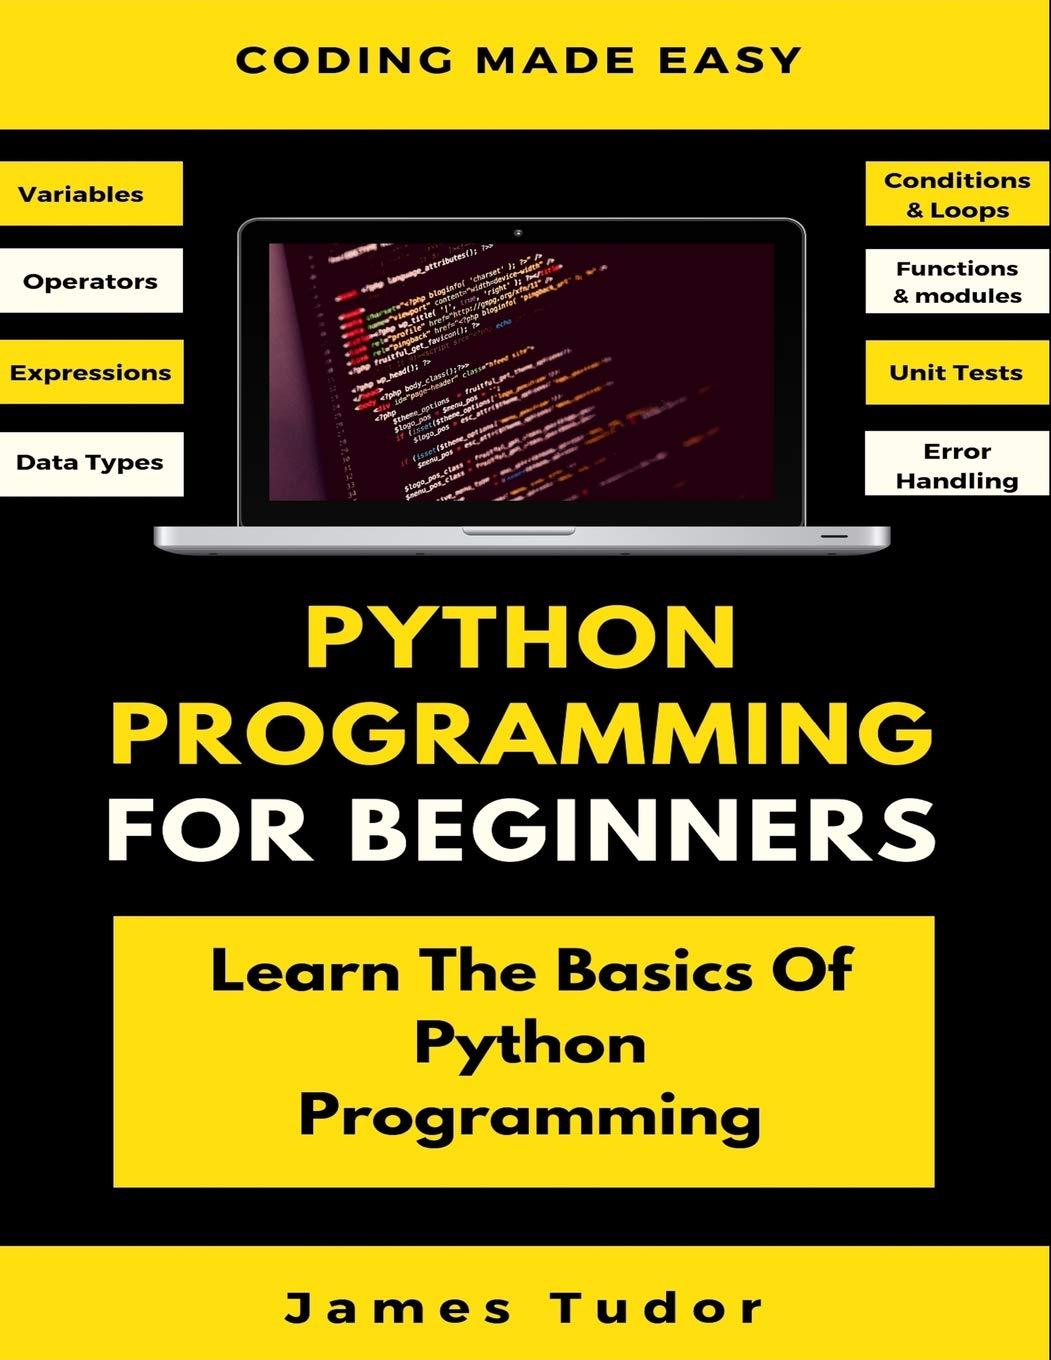 python programming for beginners learn the basics of python programming 1st edition james tudor 1075311934,